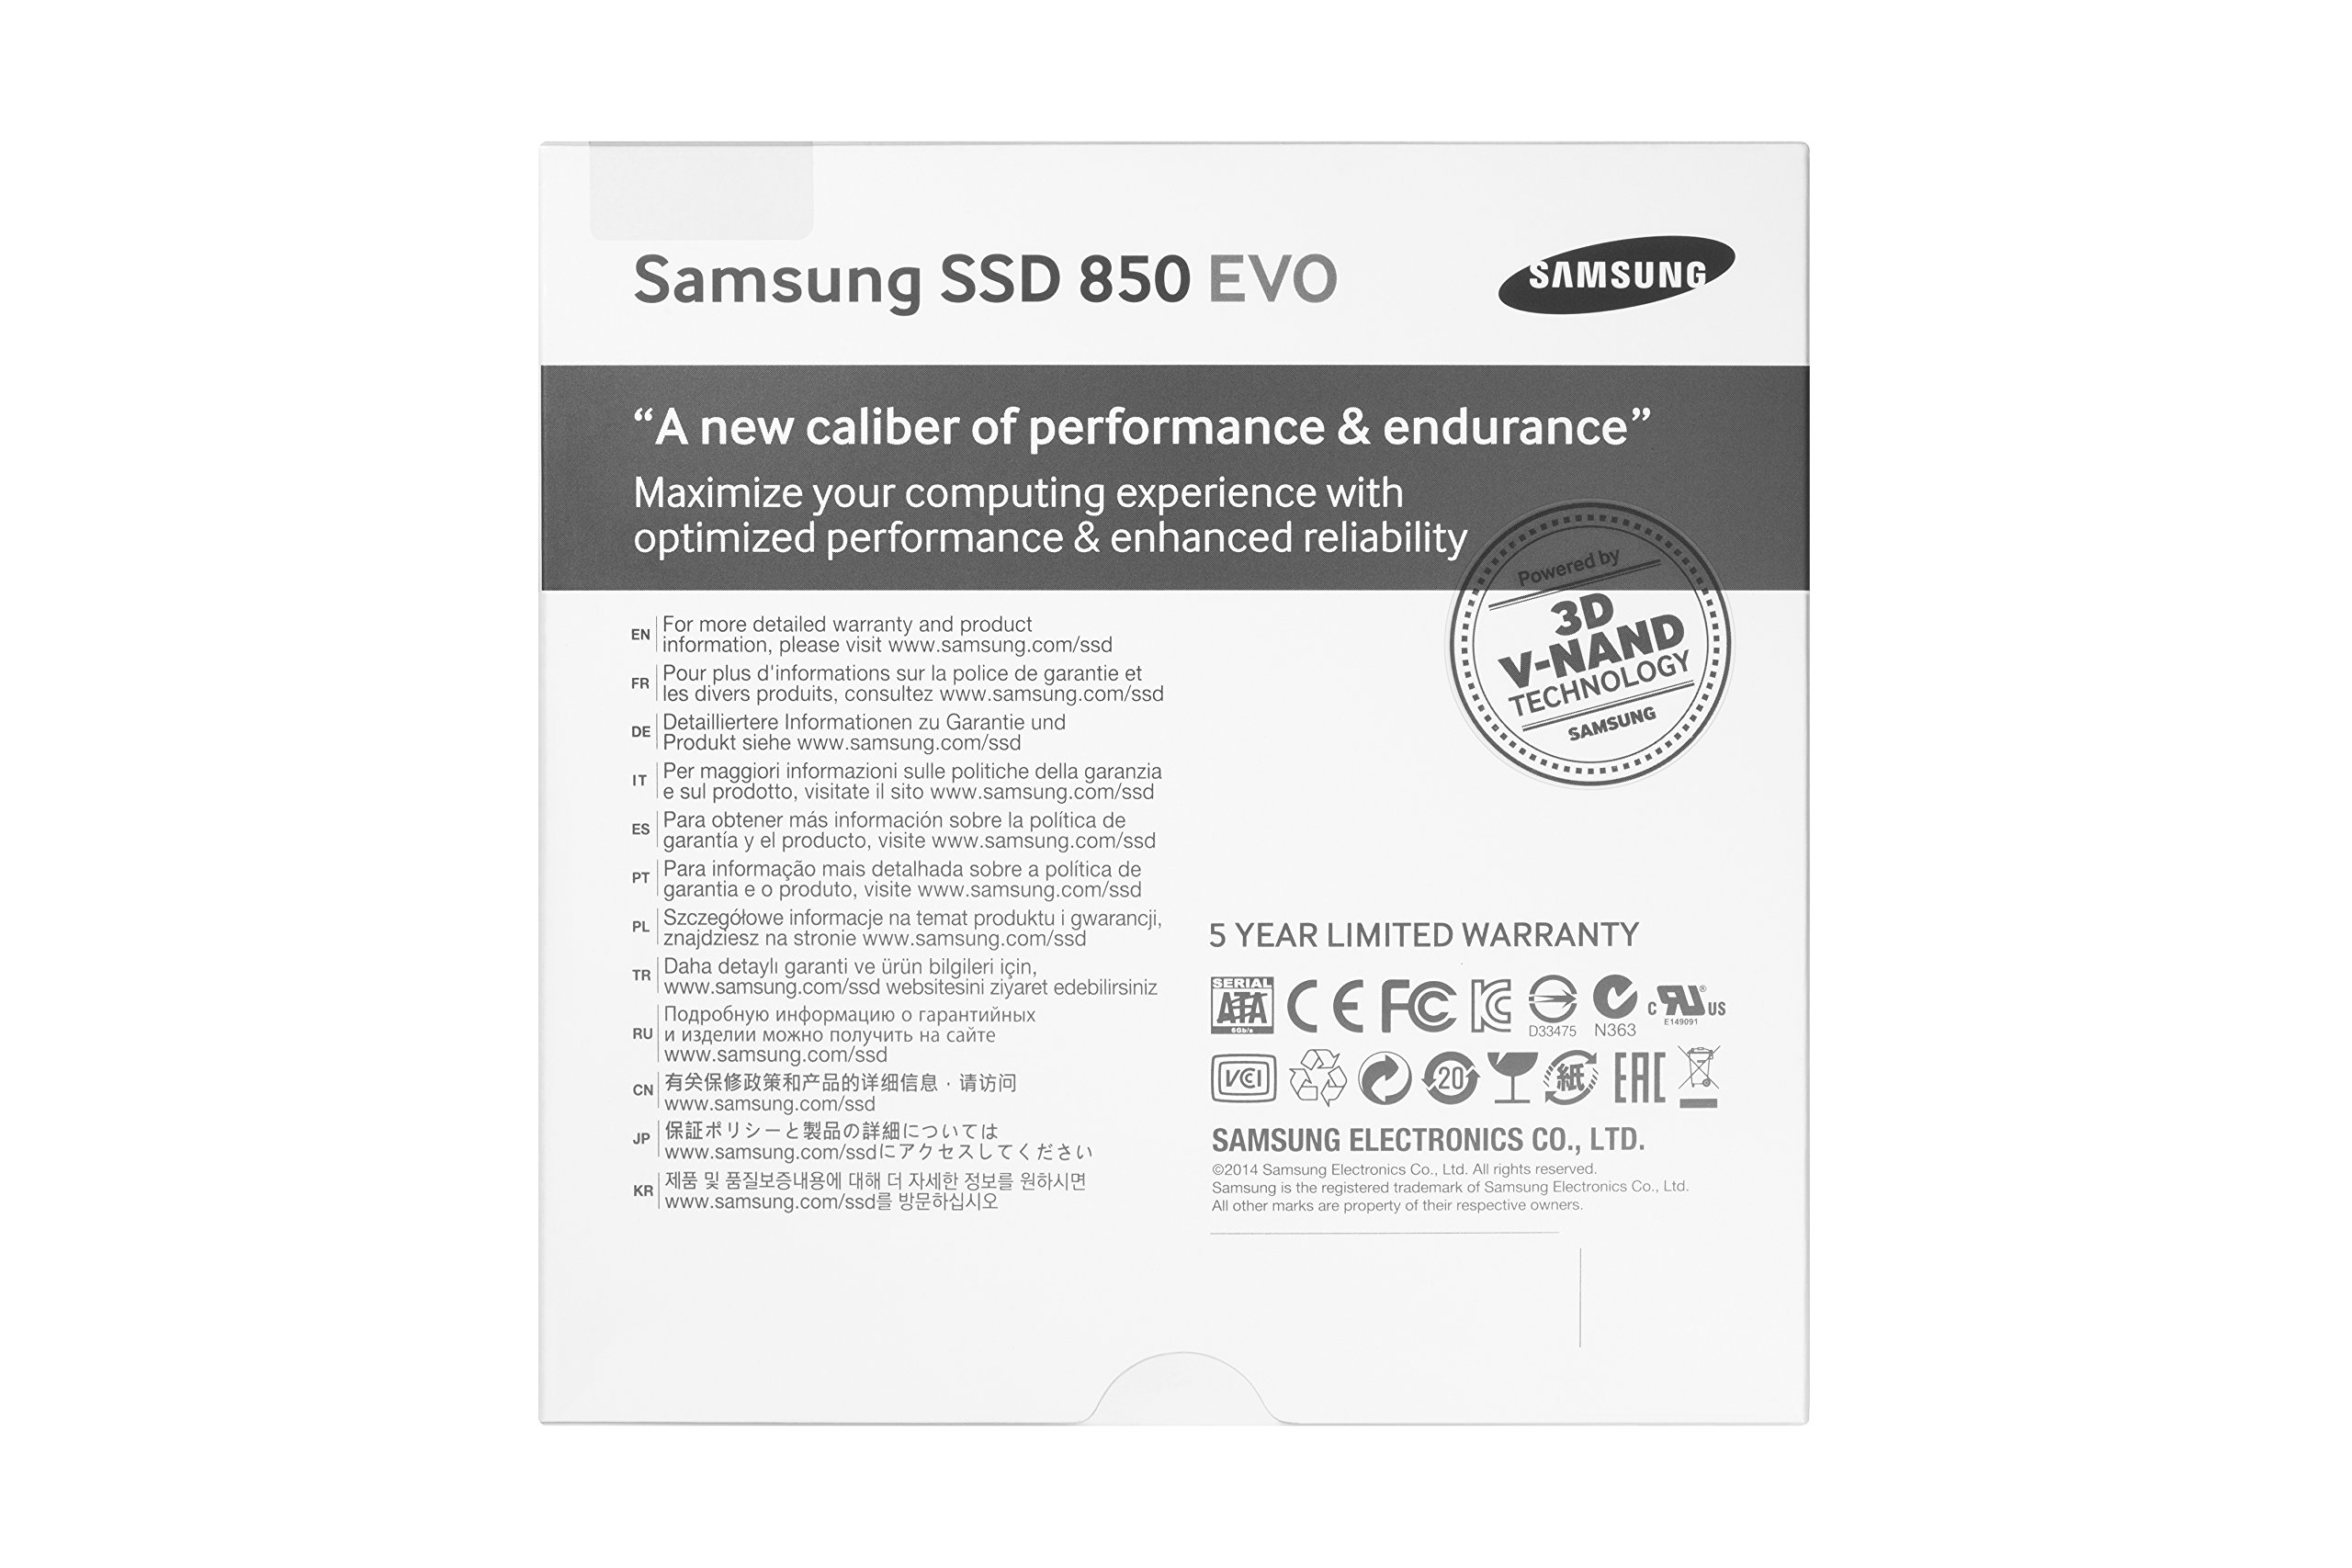 SAMSUNG 850 EVO 500GB 2.5-Inch SATA III Internal SSD (MZ-75E500B/AM)